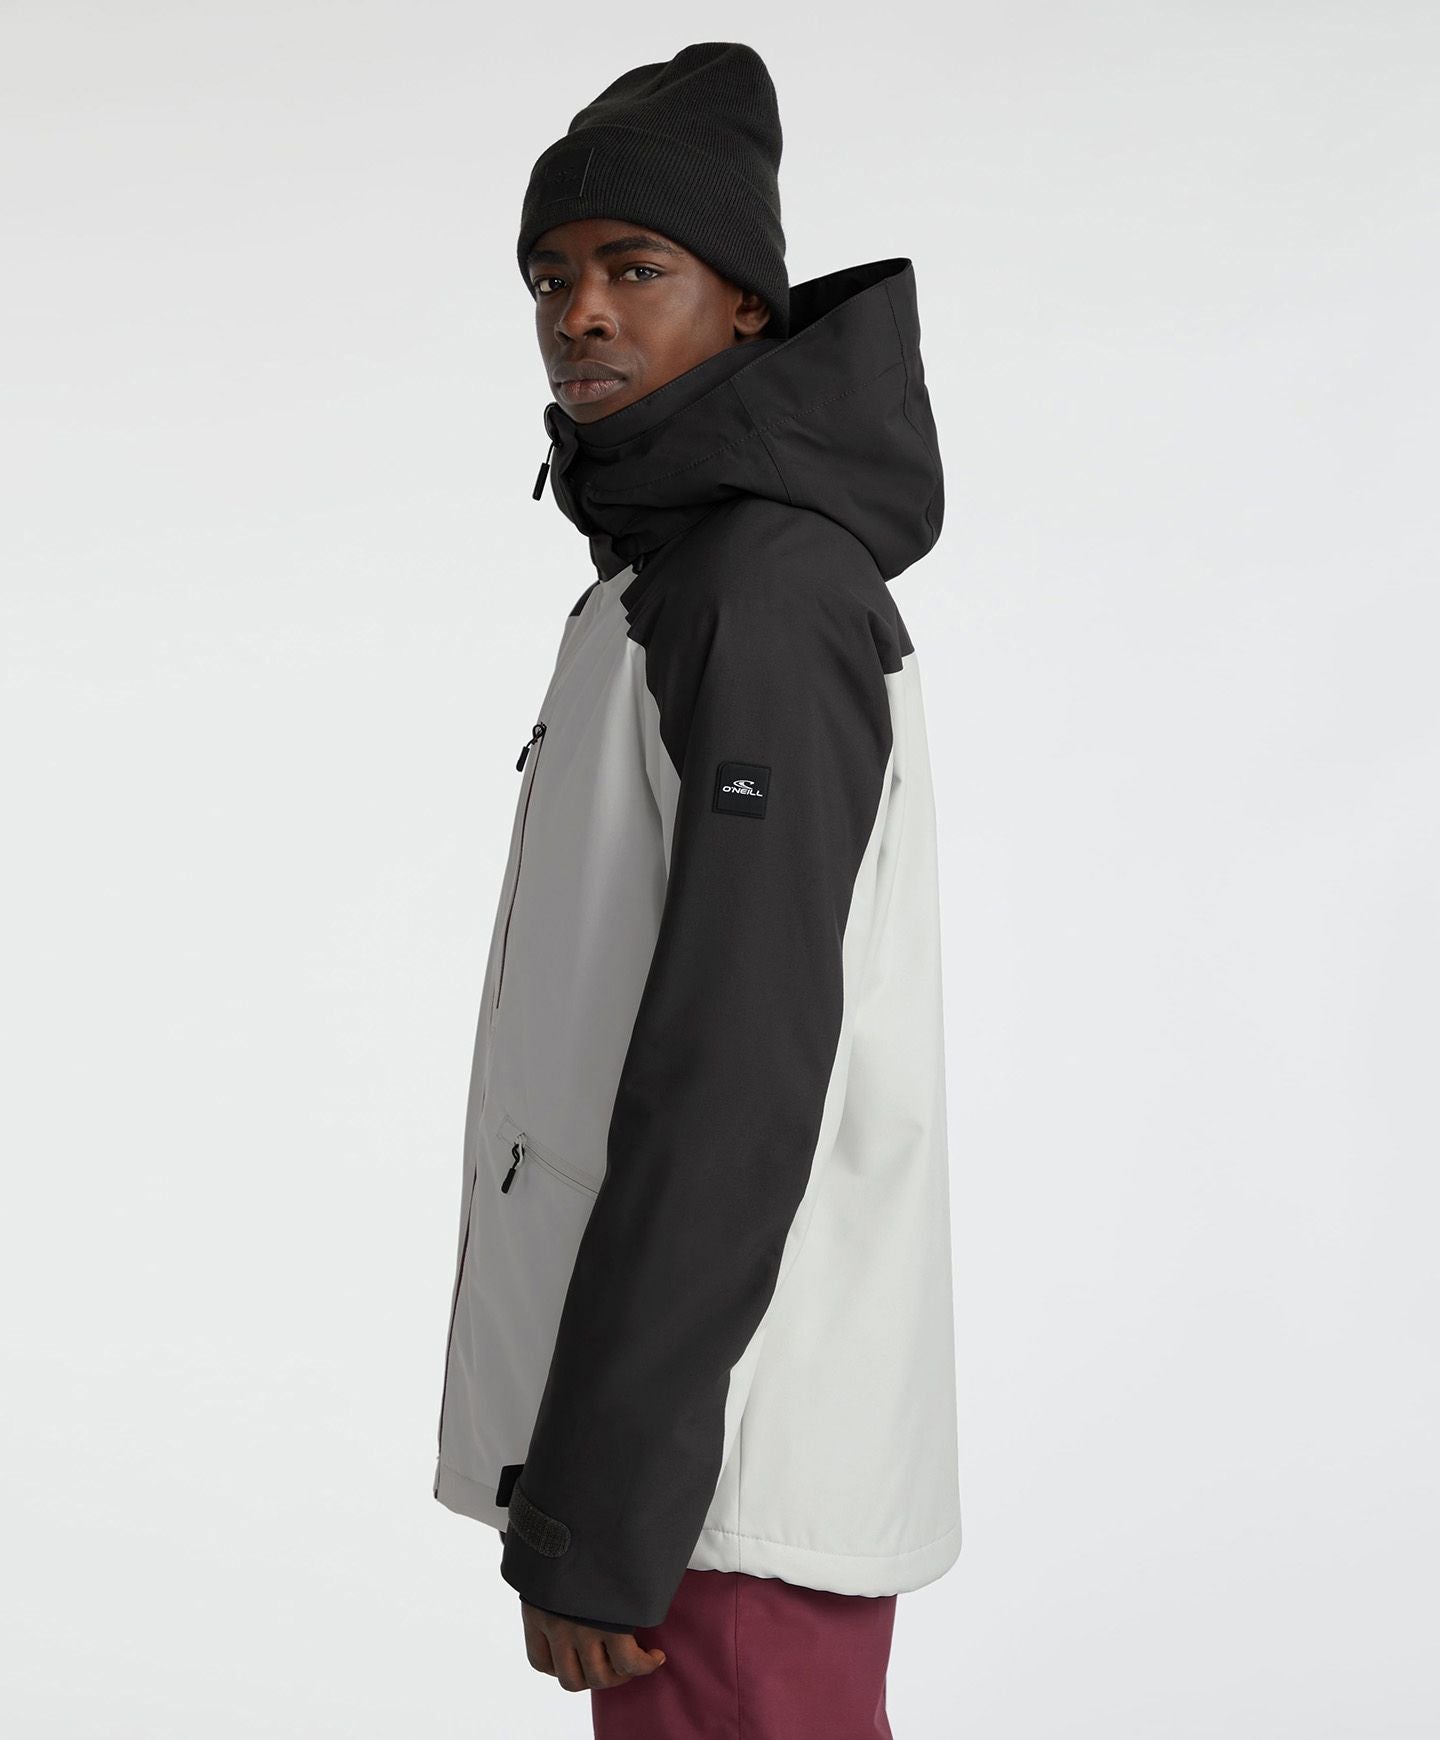 Men's Diabase Snow Jacket - London Fog Colour Block